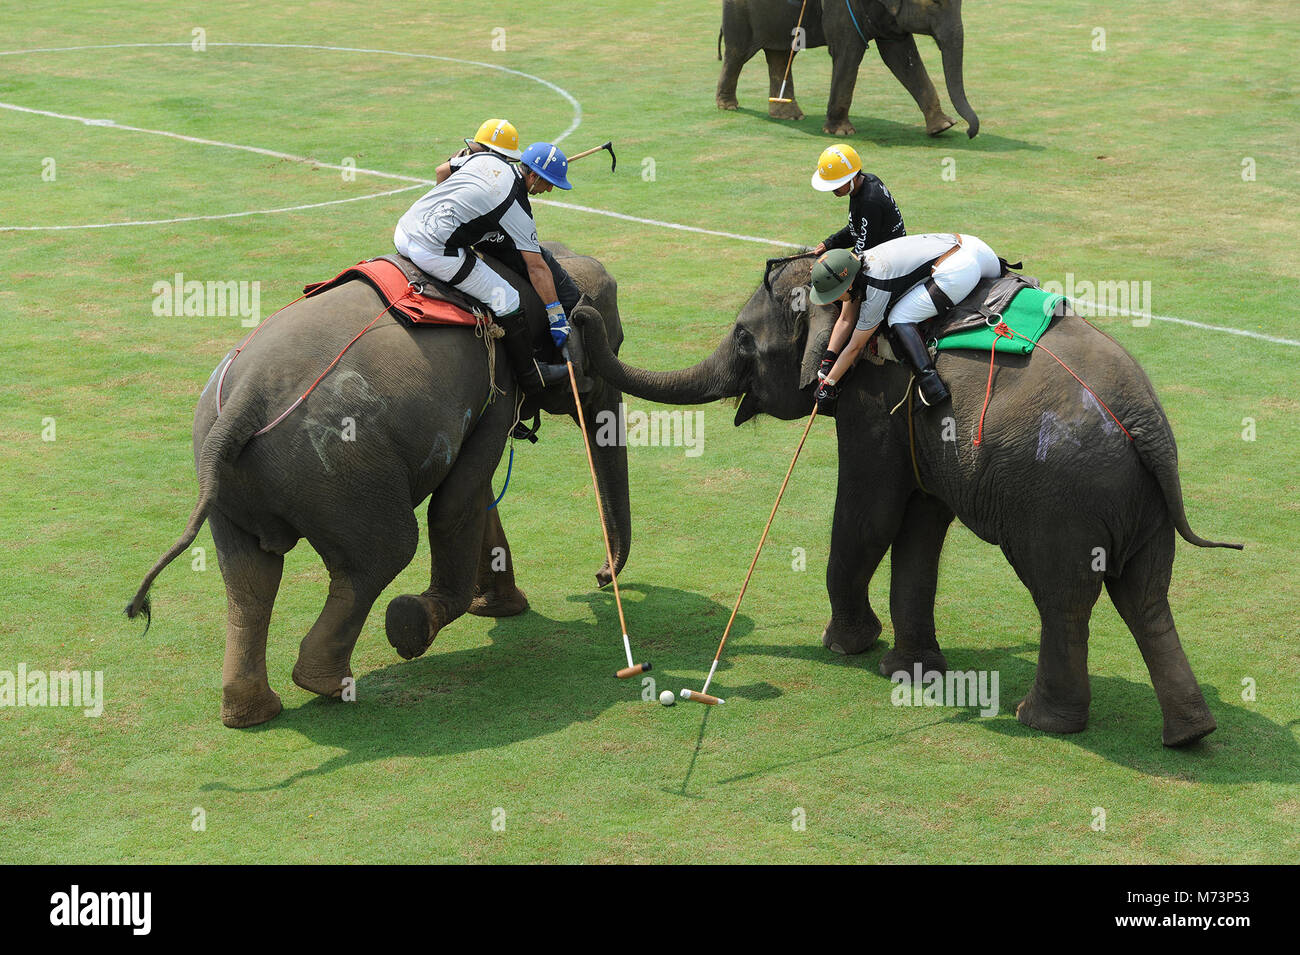 Bangkok. 8th Mar, 2018. Elephant polo teams battle for the ball during a  match at the 16th King's Cup Elephant Polo at Anantara Chaopraya Resort in  Bangkok, Thailand on March 8, 2018.